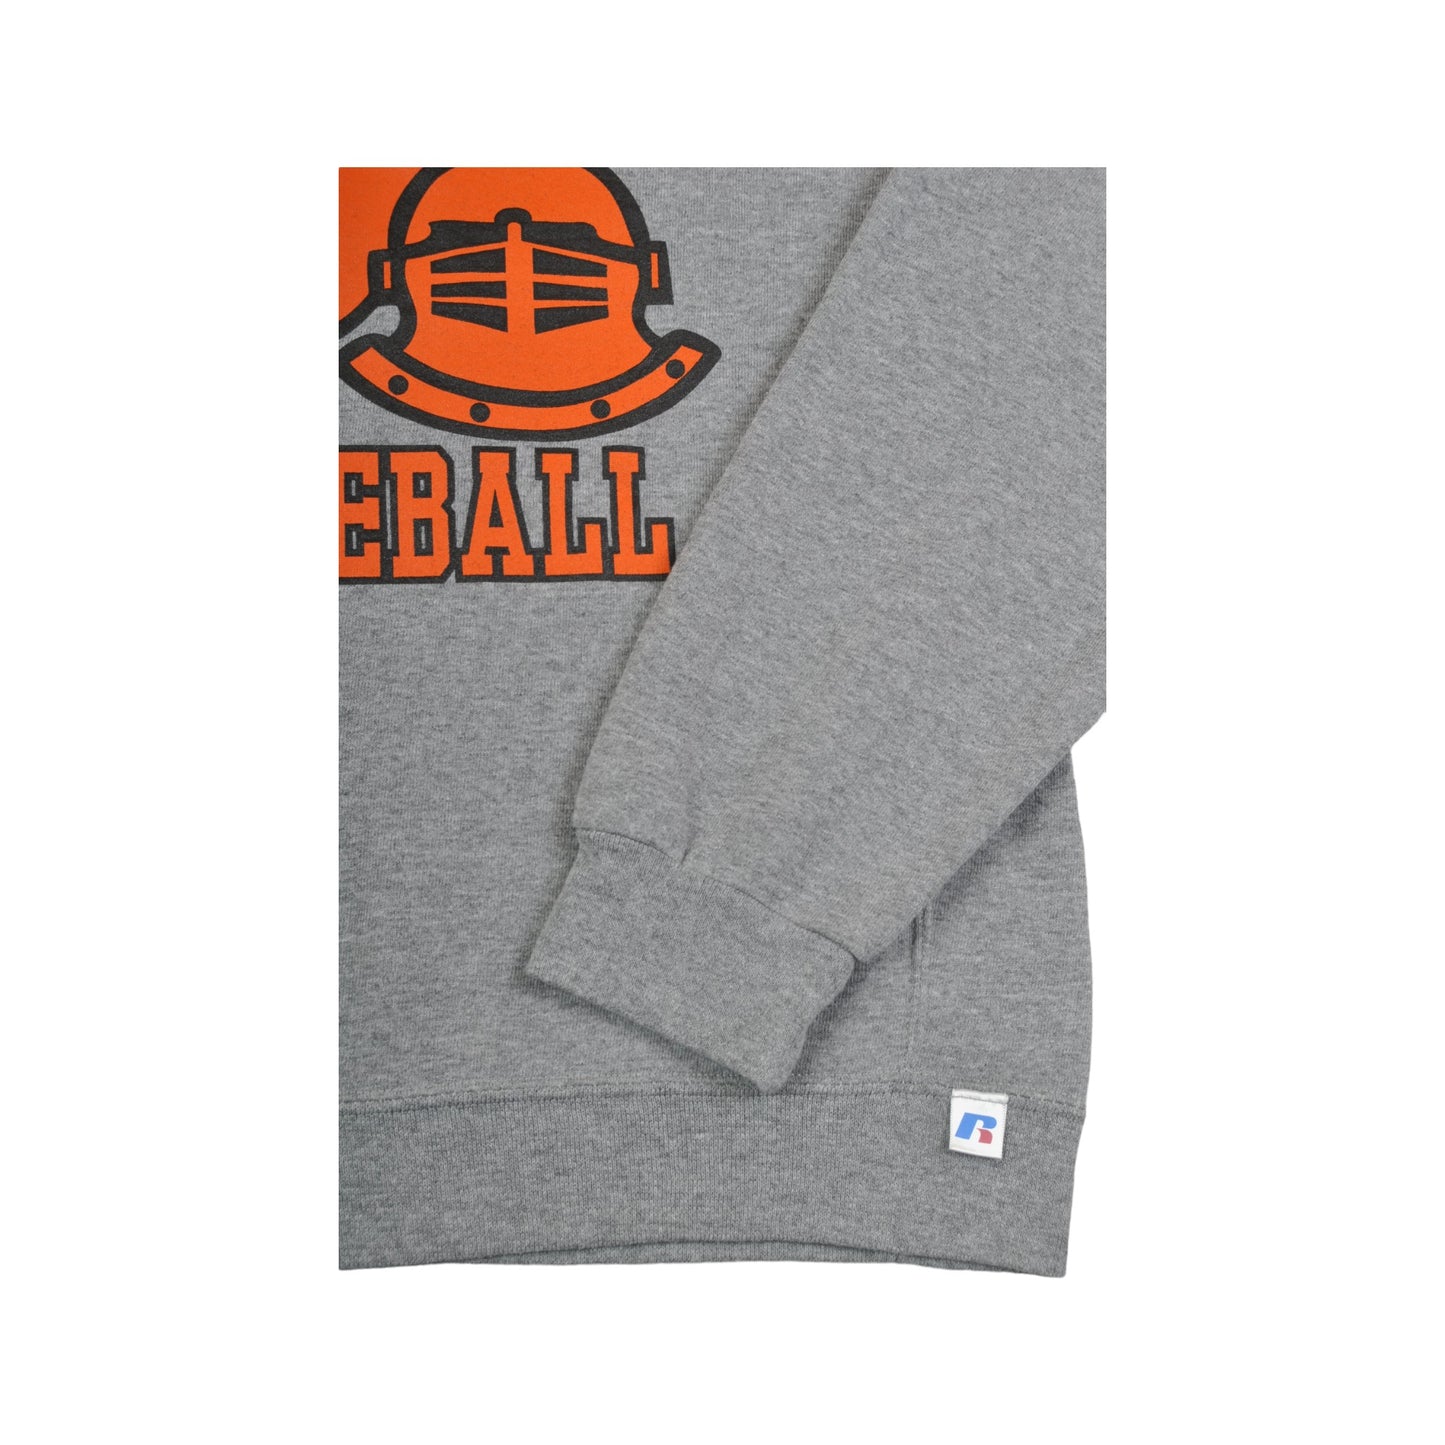 Vintage Normal Community Baseball Crew Neck Sweatshirt Grey Small